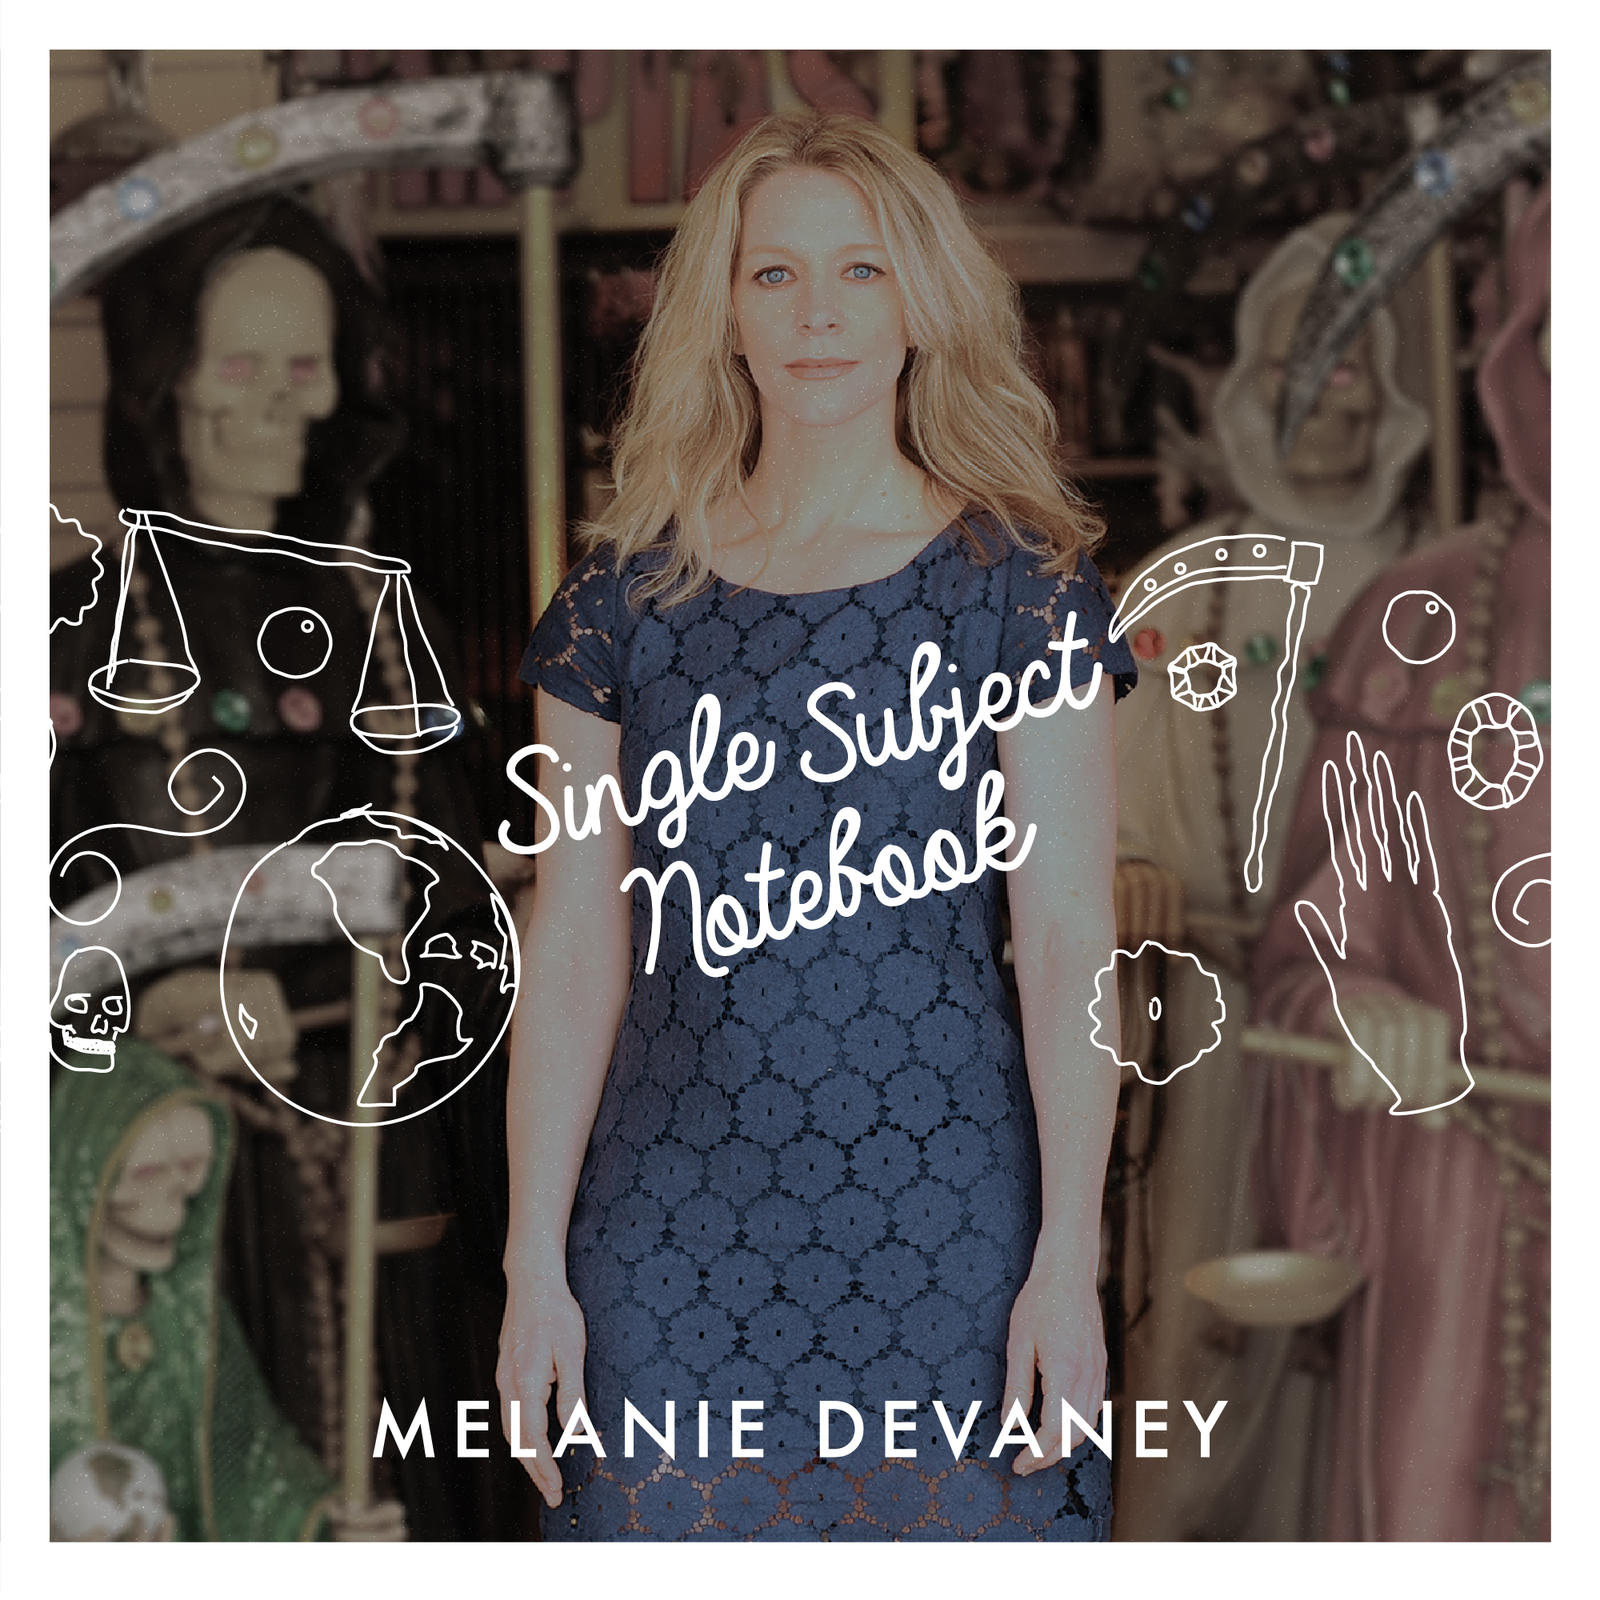 Singer Melanie Devaney's album Single Subject Notebook